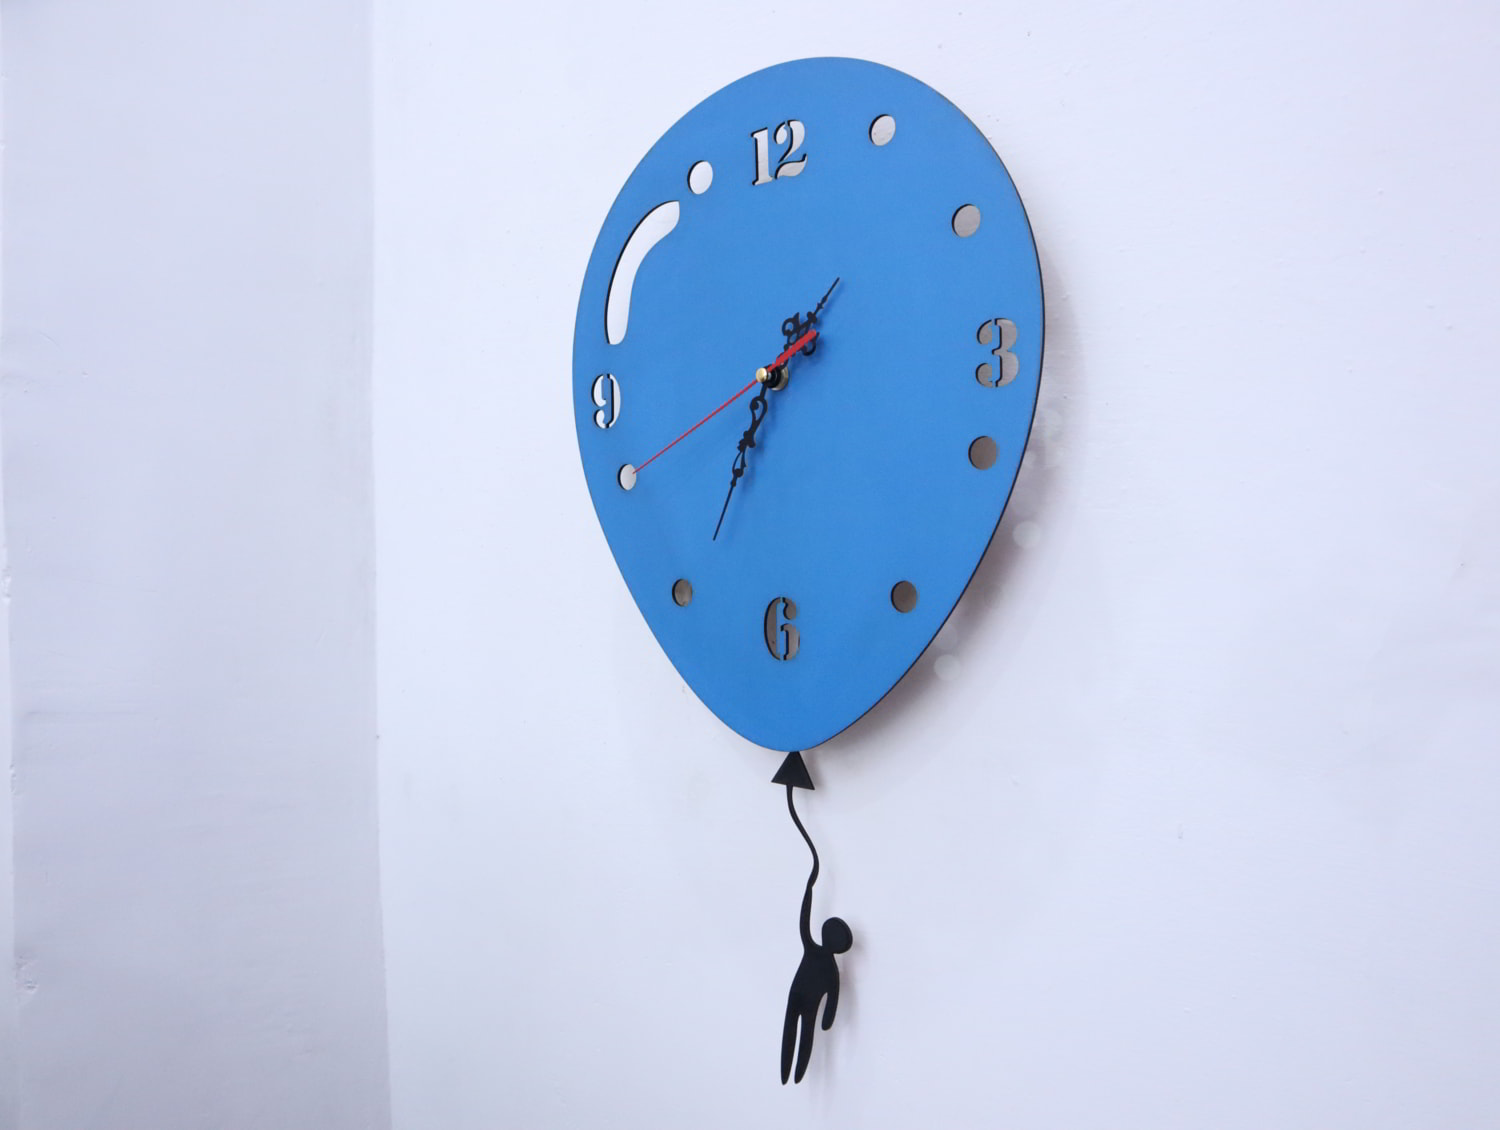 Laser Cut Balloon Wall Clock Free Vector